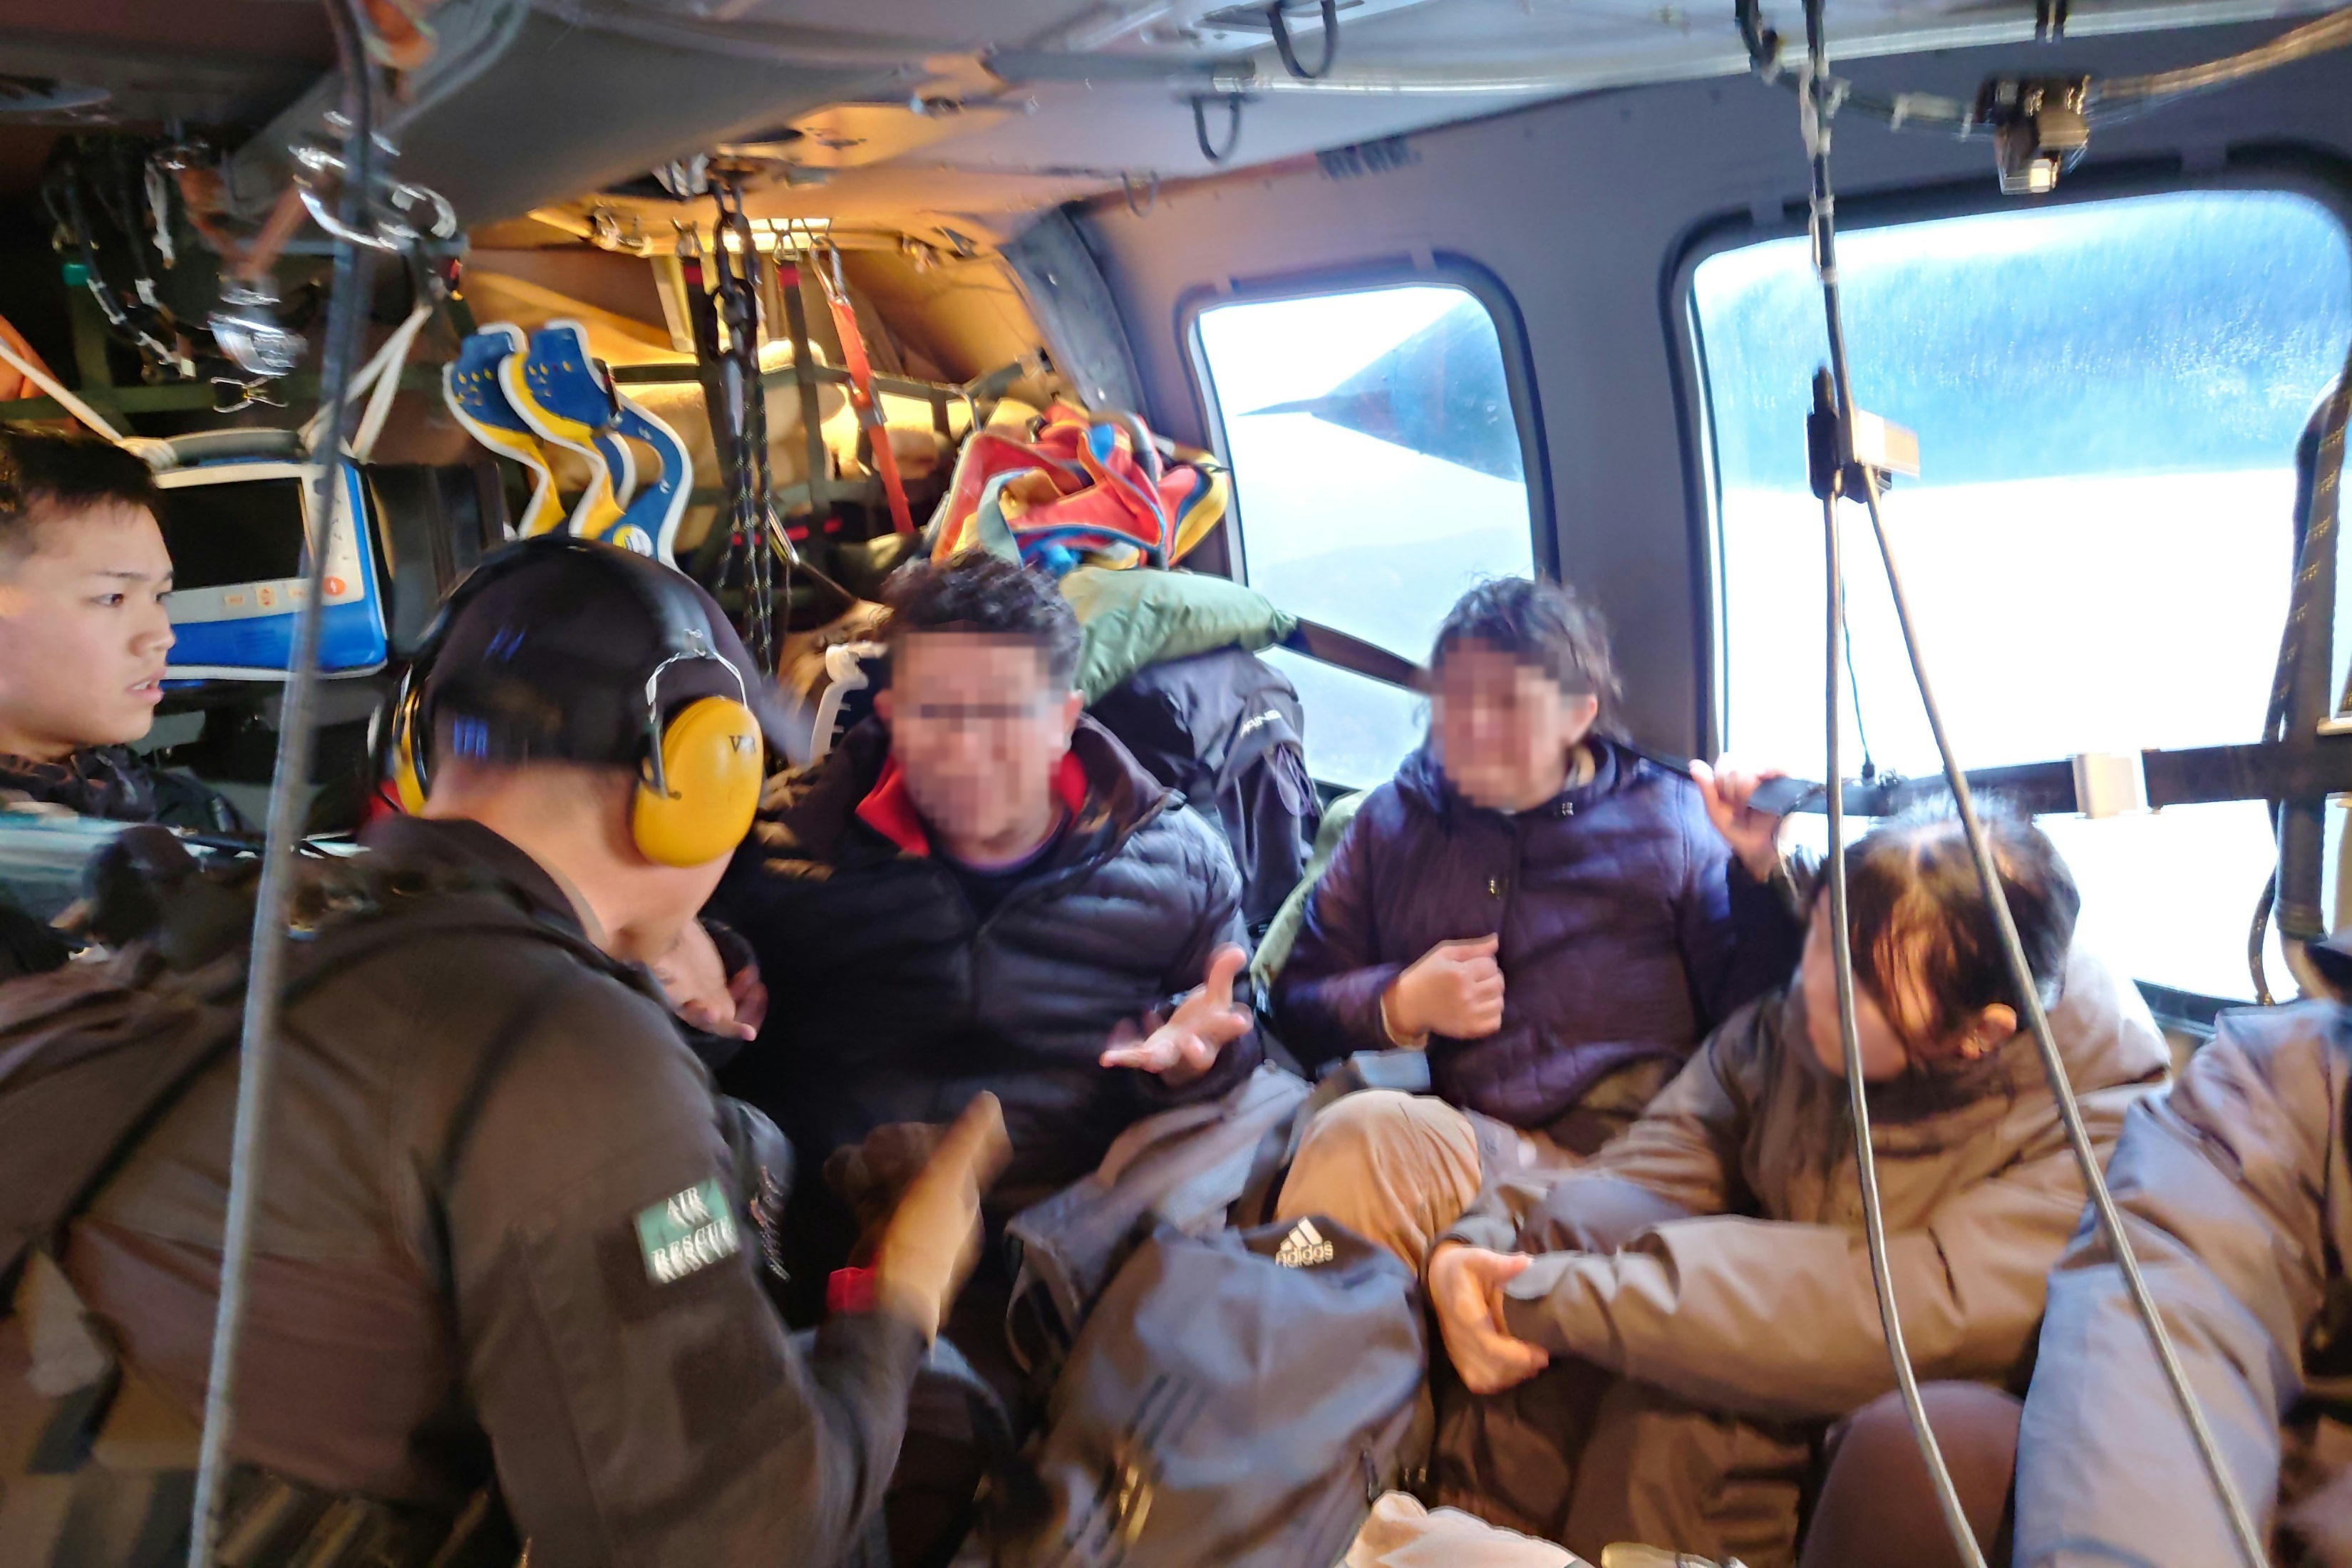 SOS表記のある孤立地域からの移送を行う小松救難隊